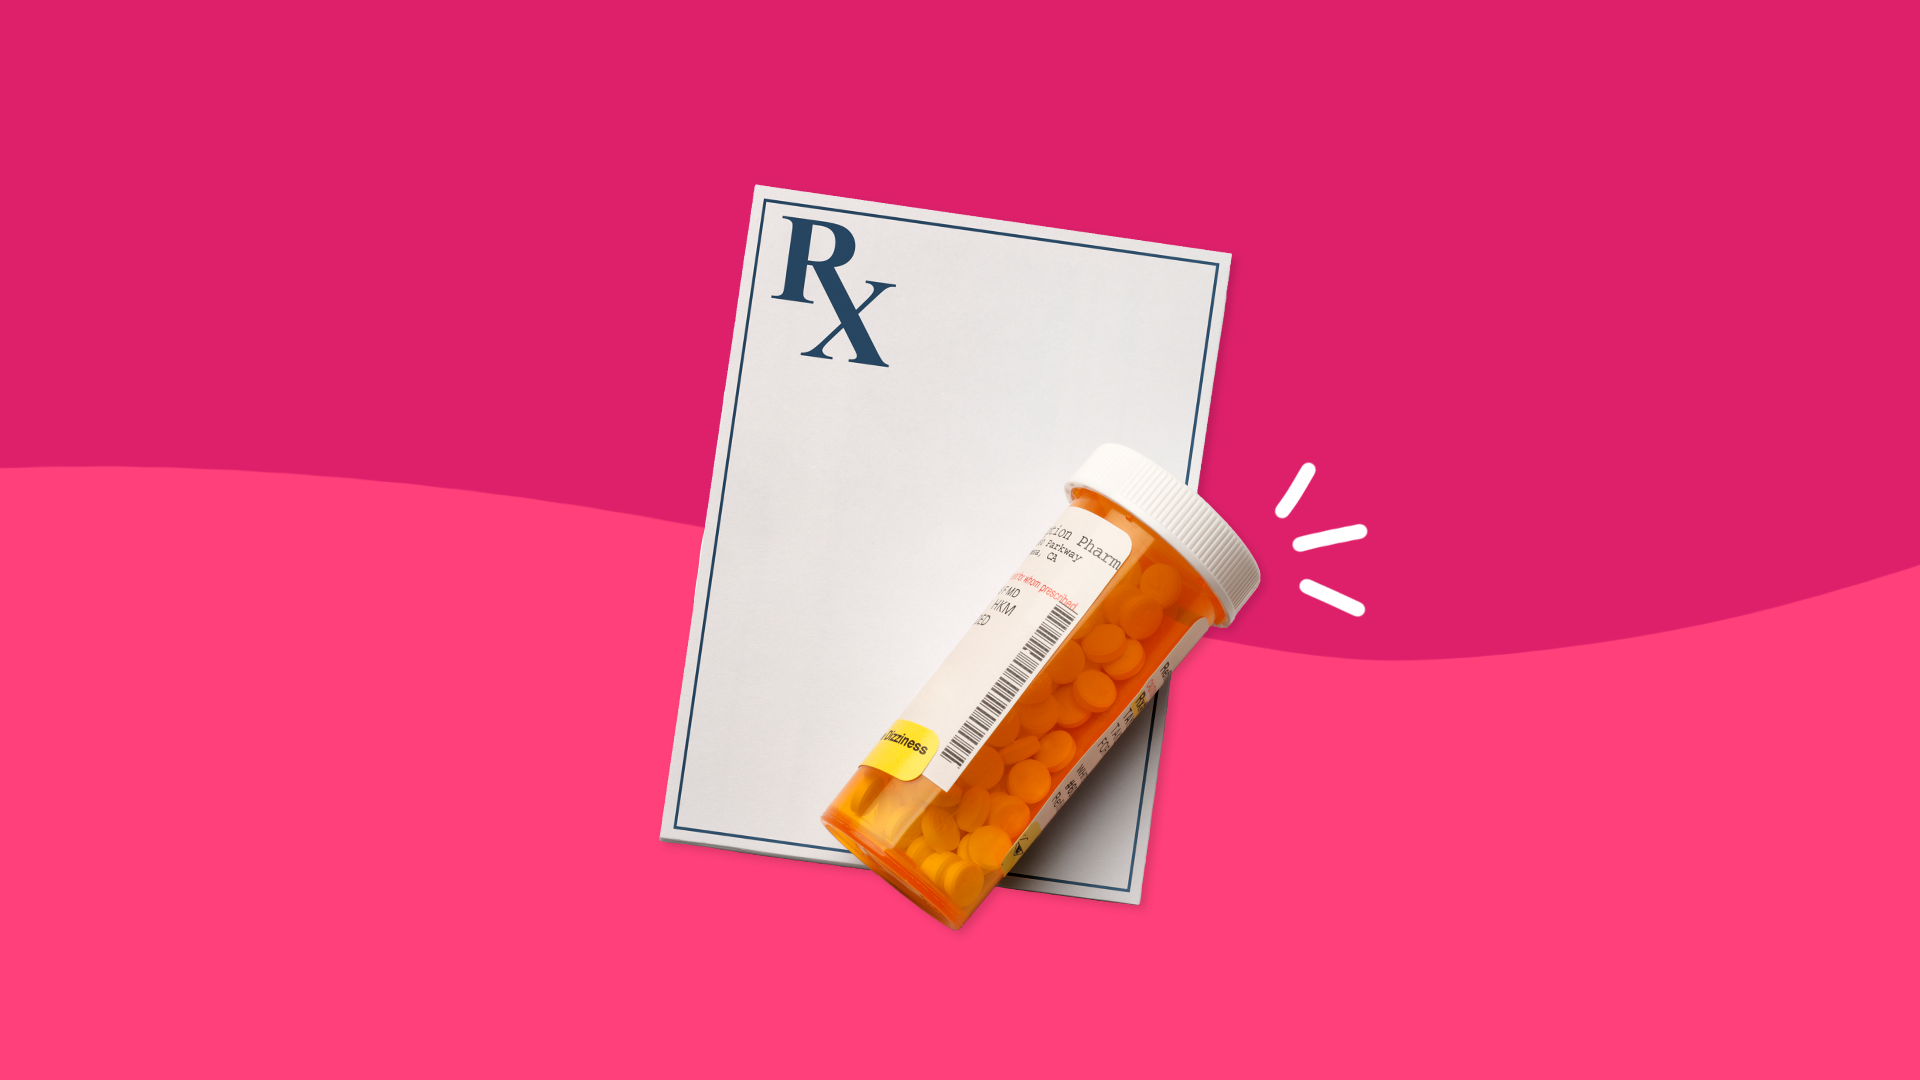 Prescription pad with pill bottle: Clonazepam side effects